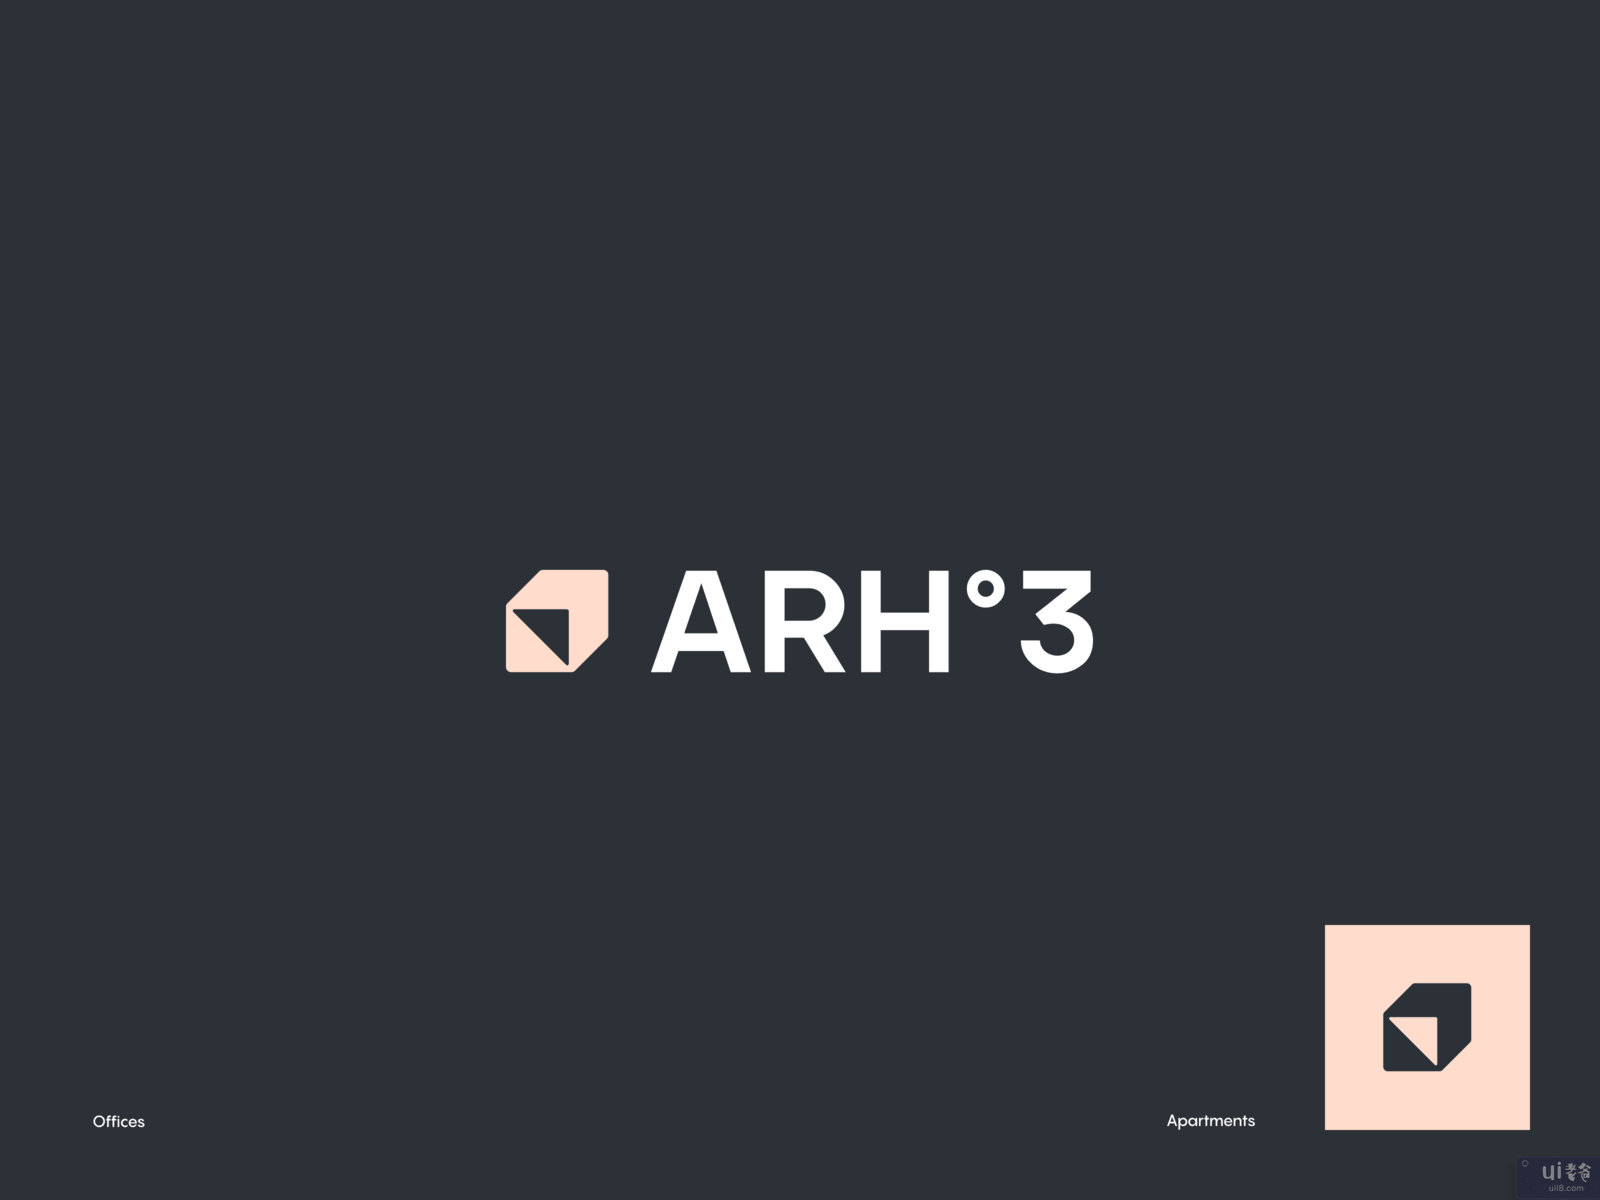 ARH-3工作室 - 营销材料(ARH-3 Studio - Marketing Materials)插图1